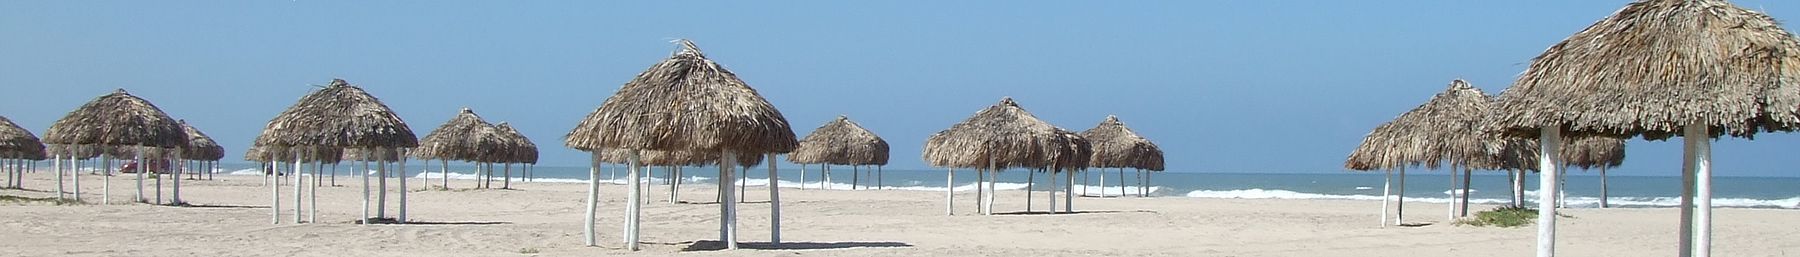 WV banner Tamaulipas La Pesca beach.jpg